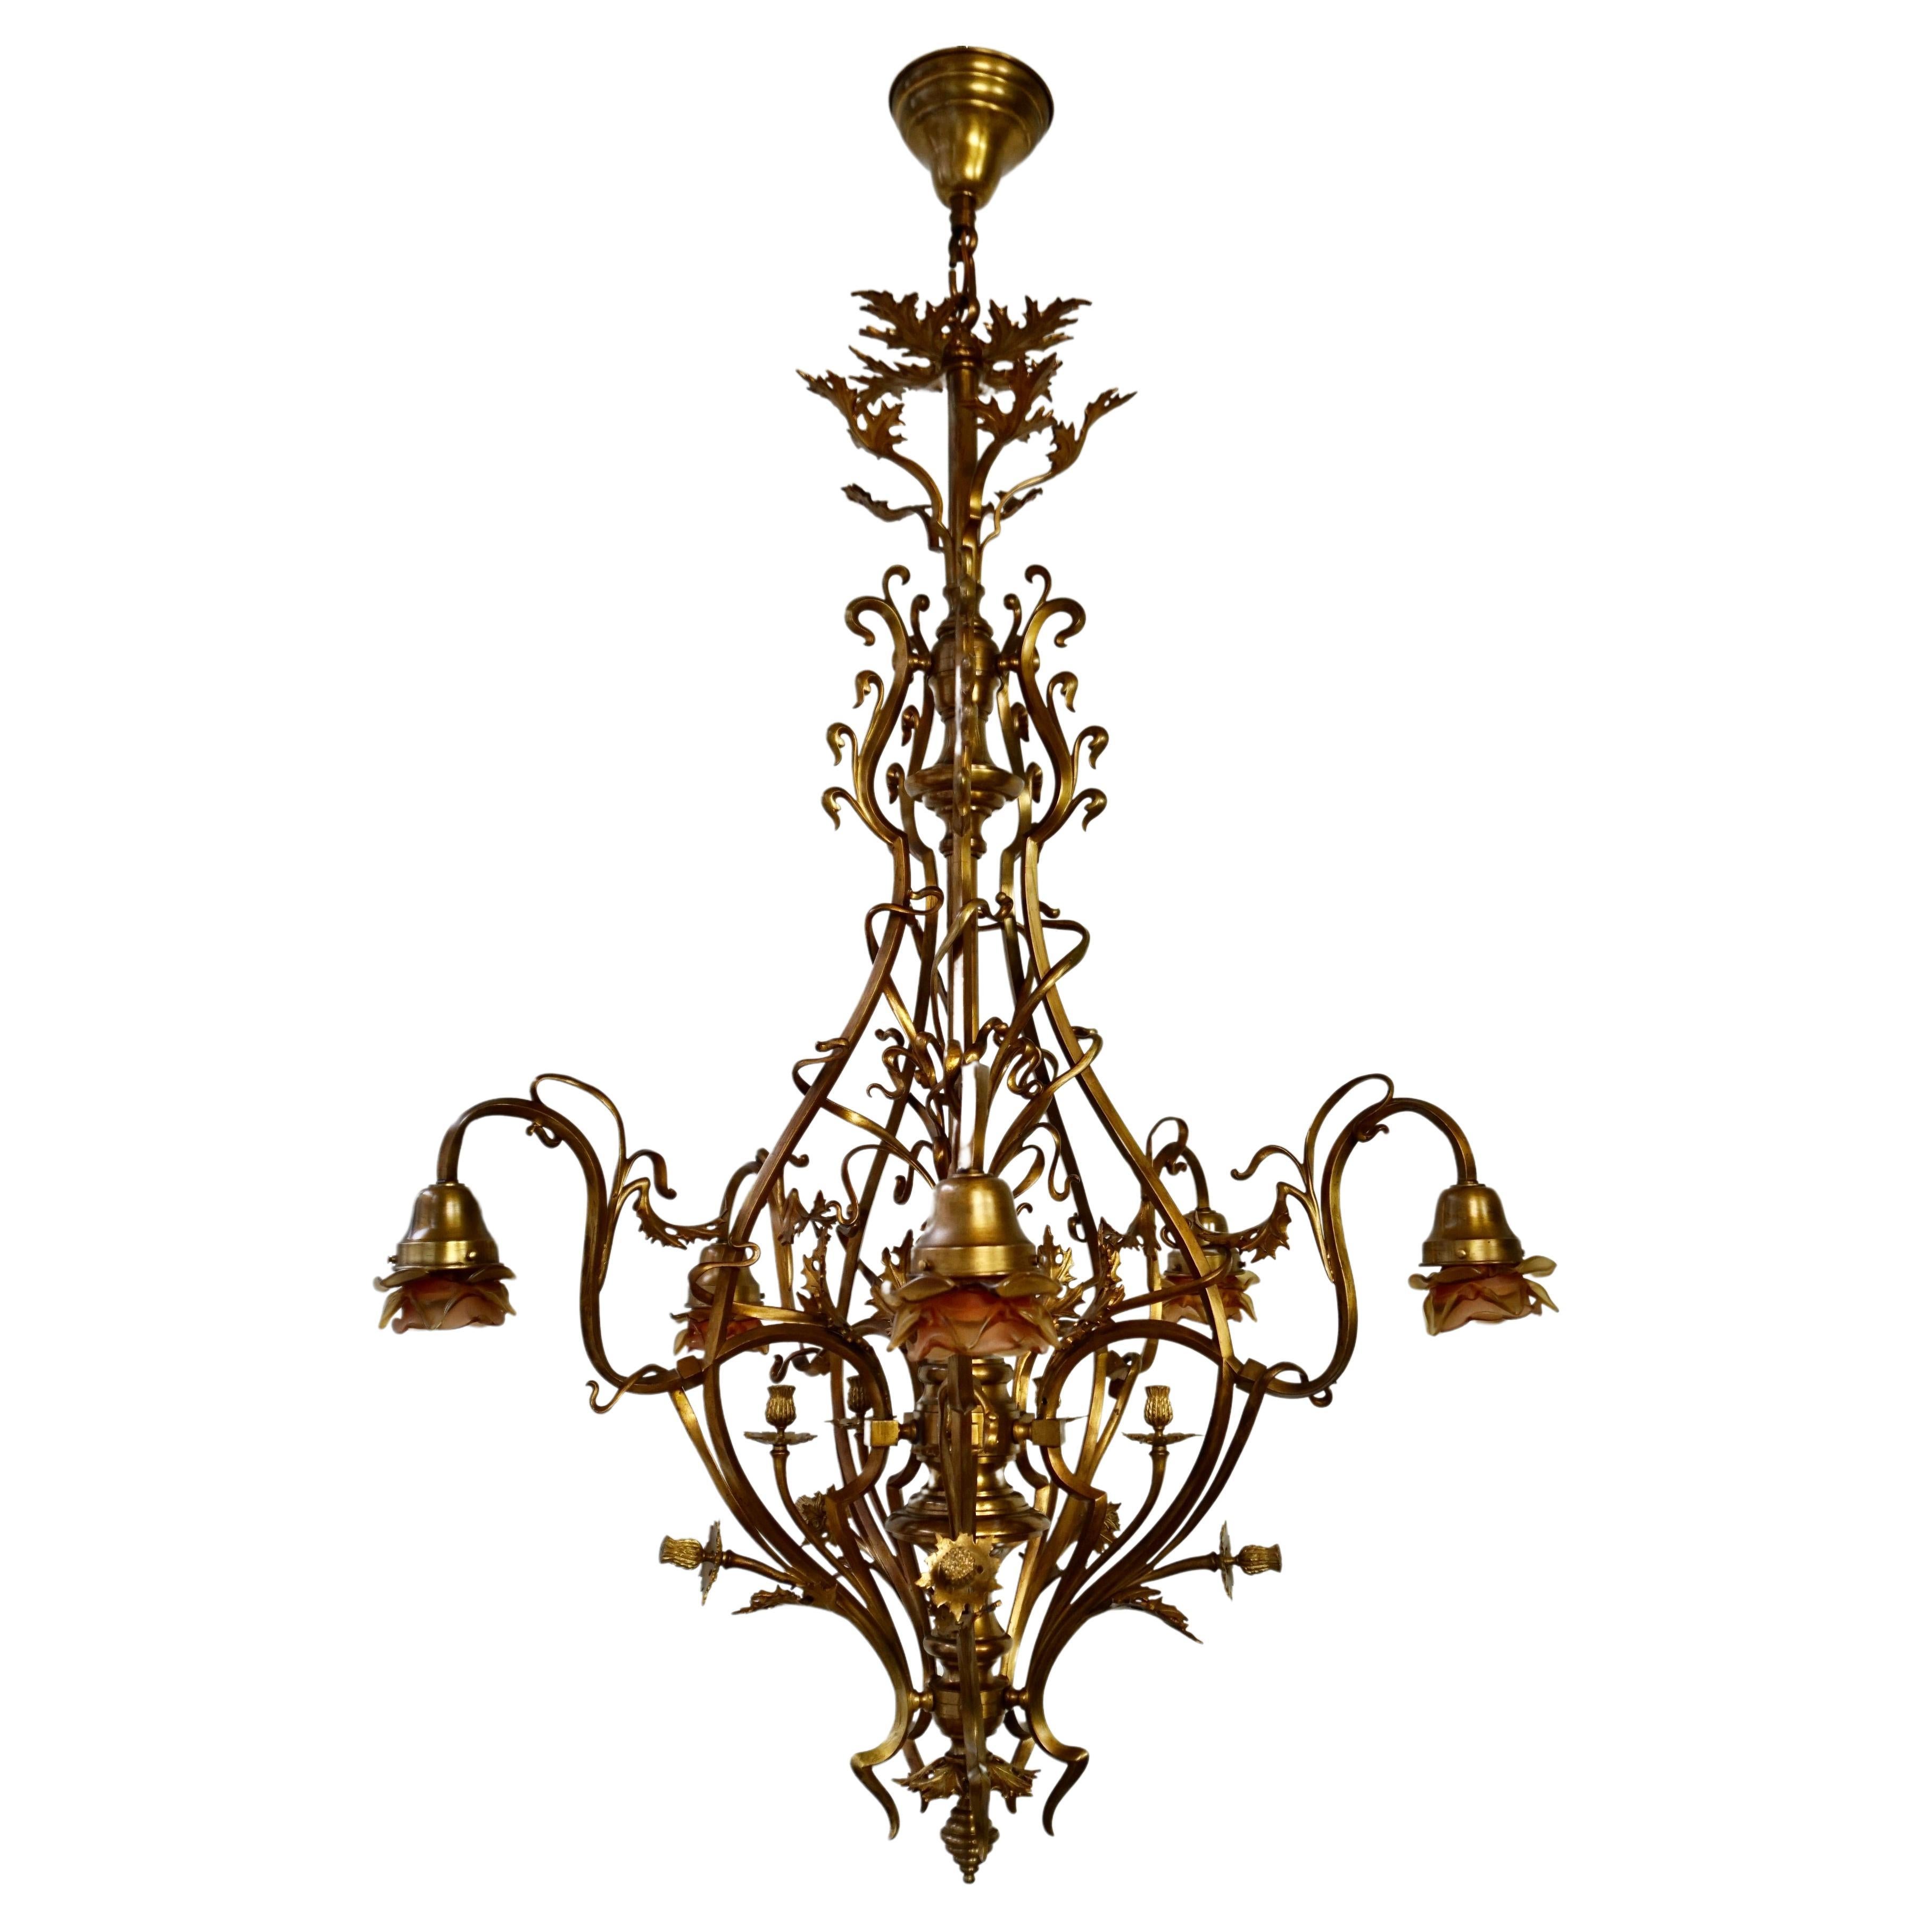 Large and Top Quality, Elegant & Exquisite 5 Light Art Nouveau Chandelier For Sale